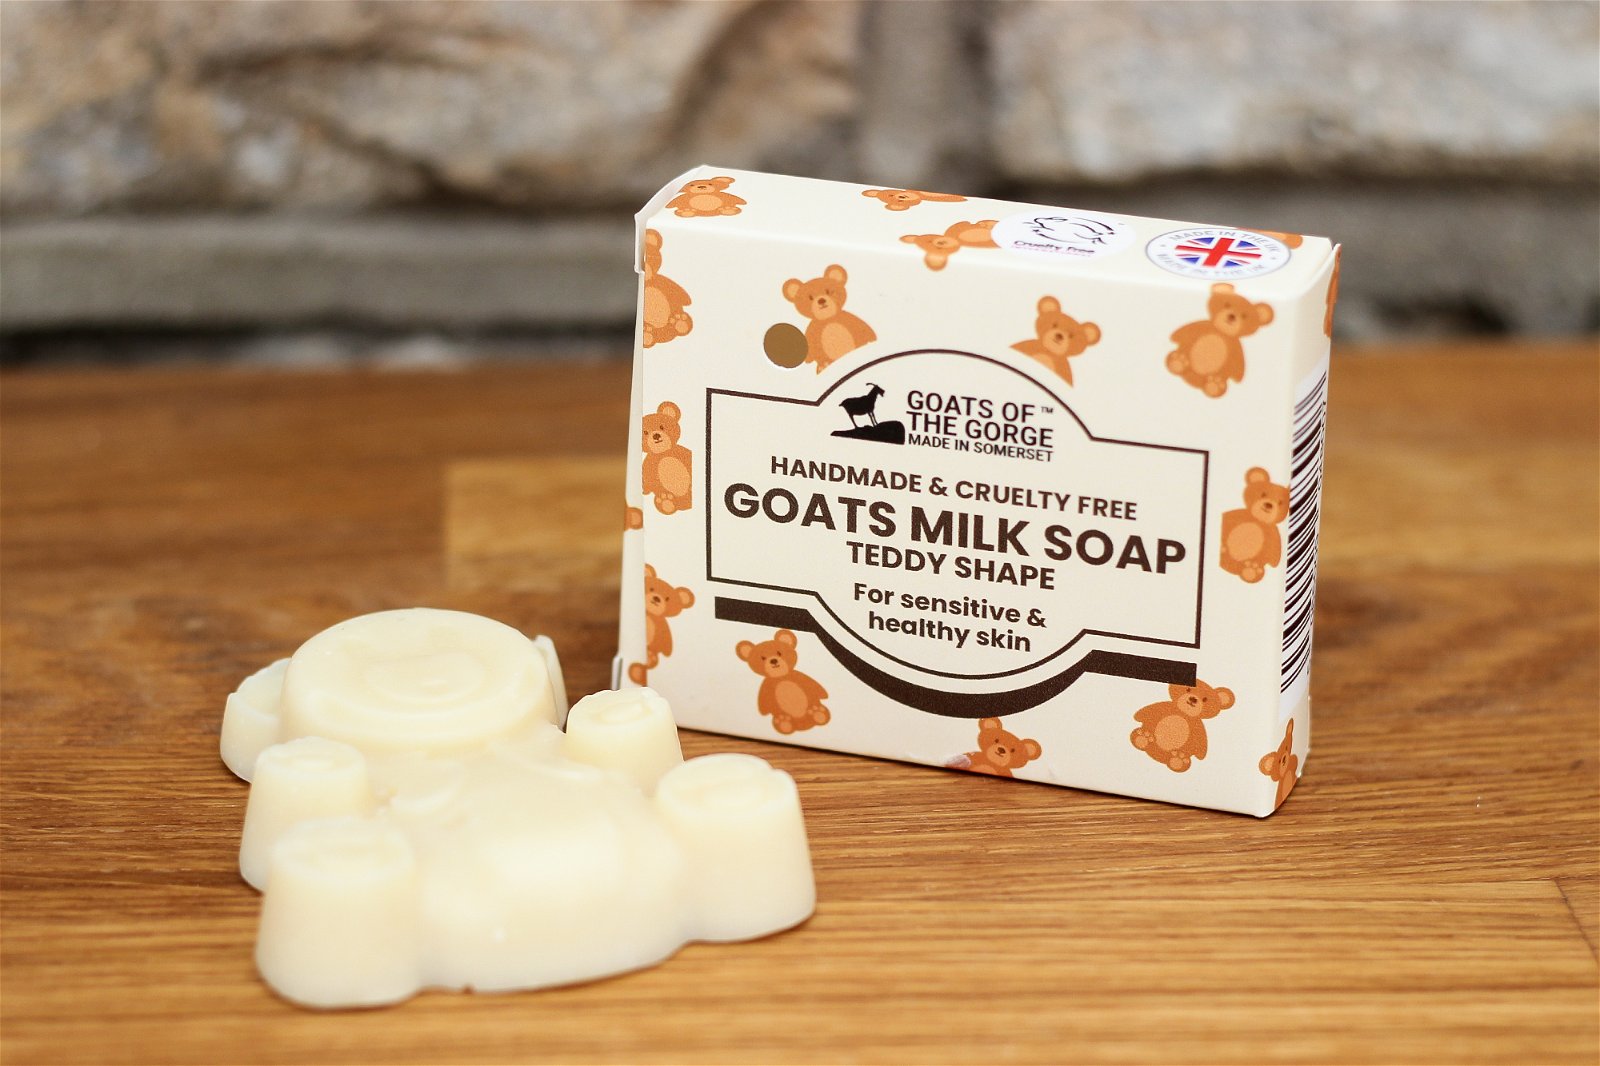 Goats Milk Soap Teddy Shape - Kaftan direct